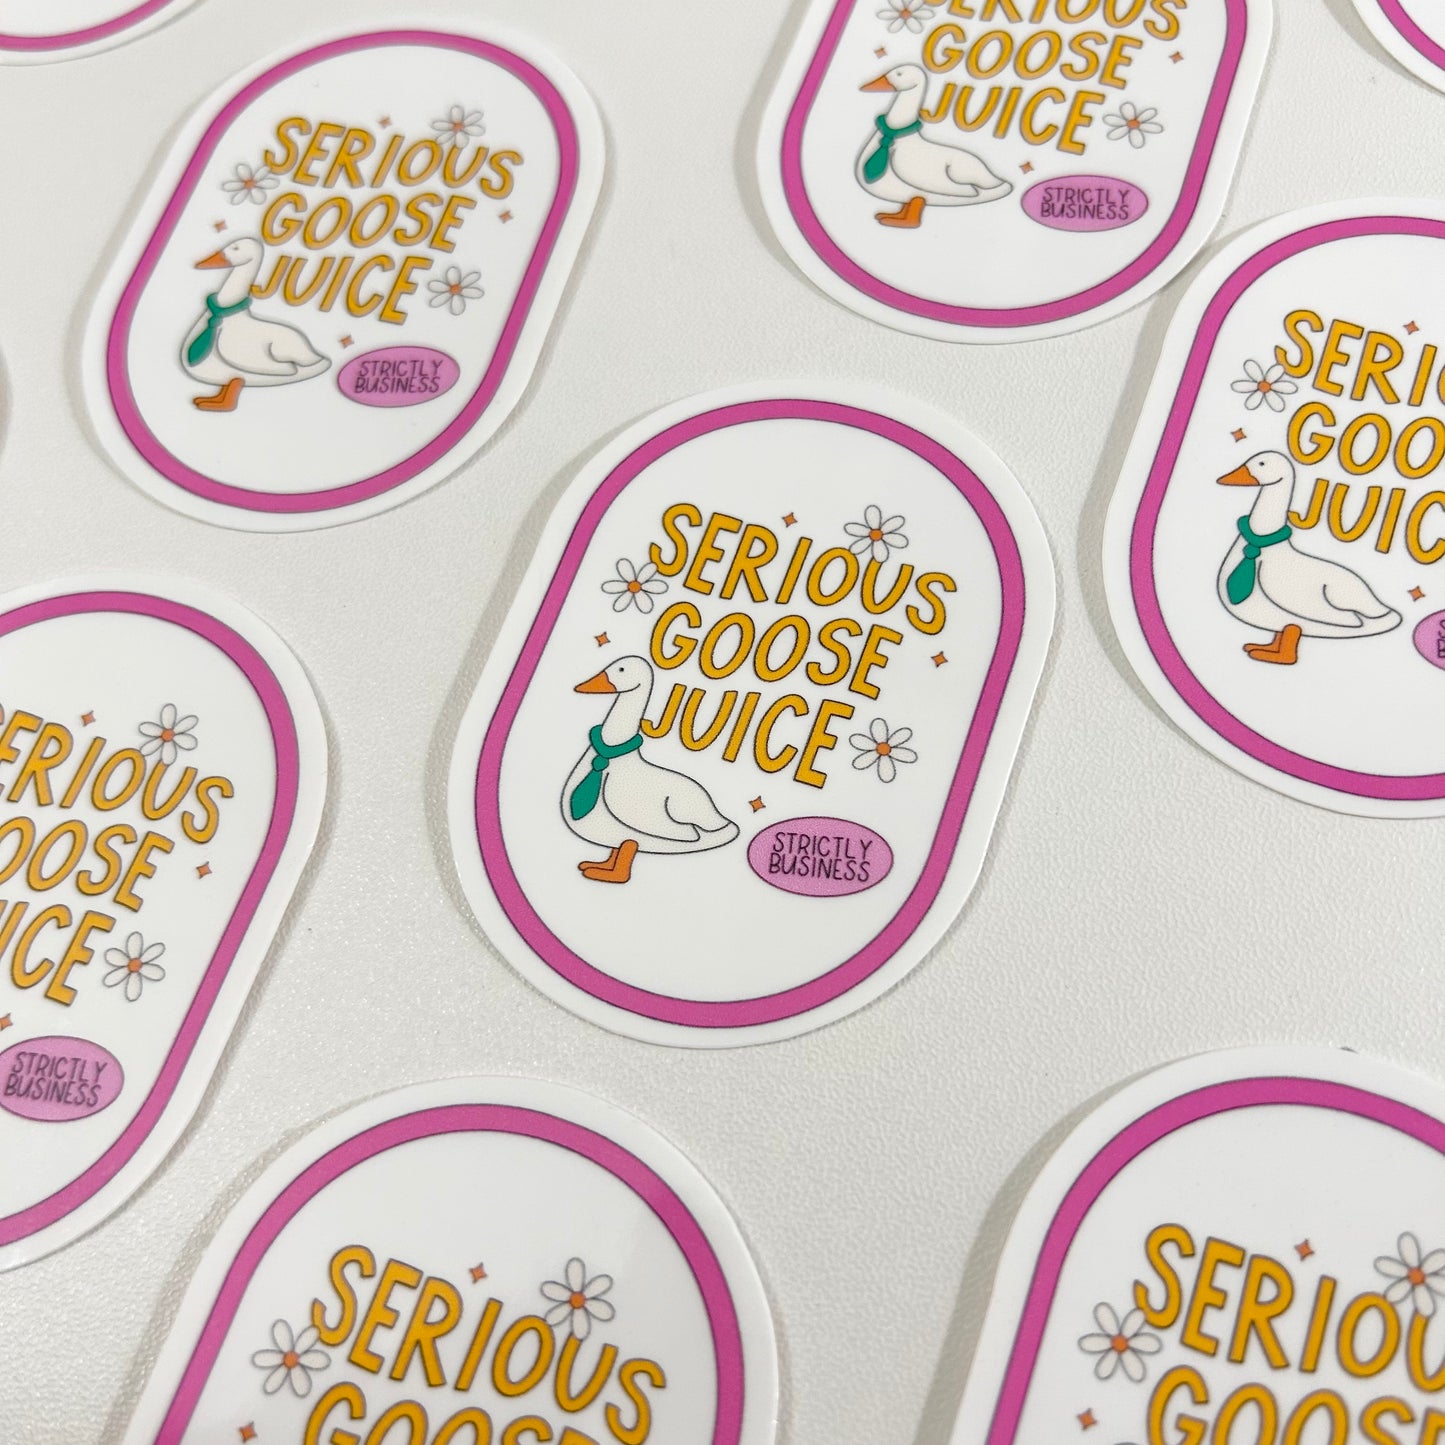 Serious Goose Juice - Funny Sticker